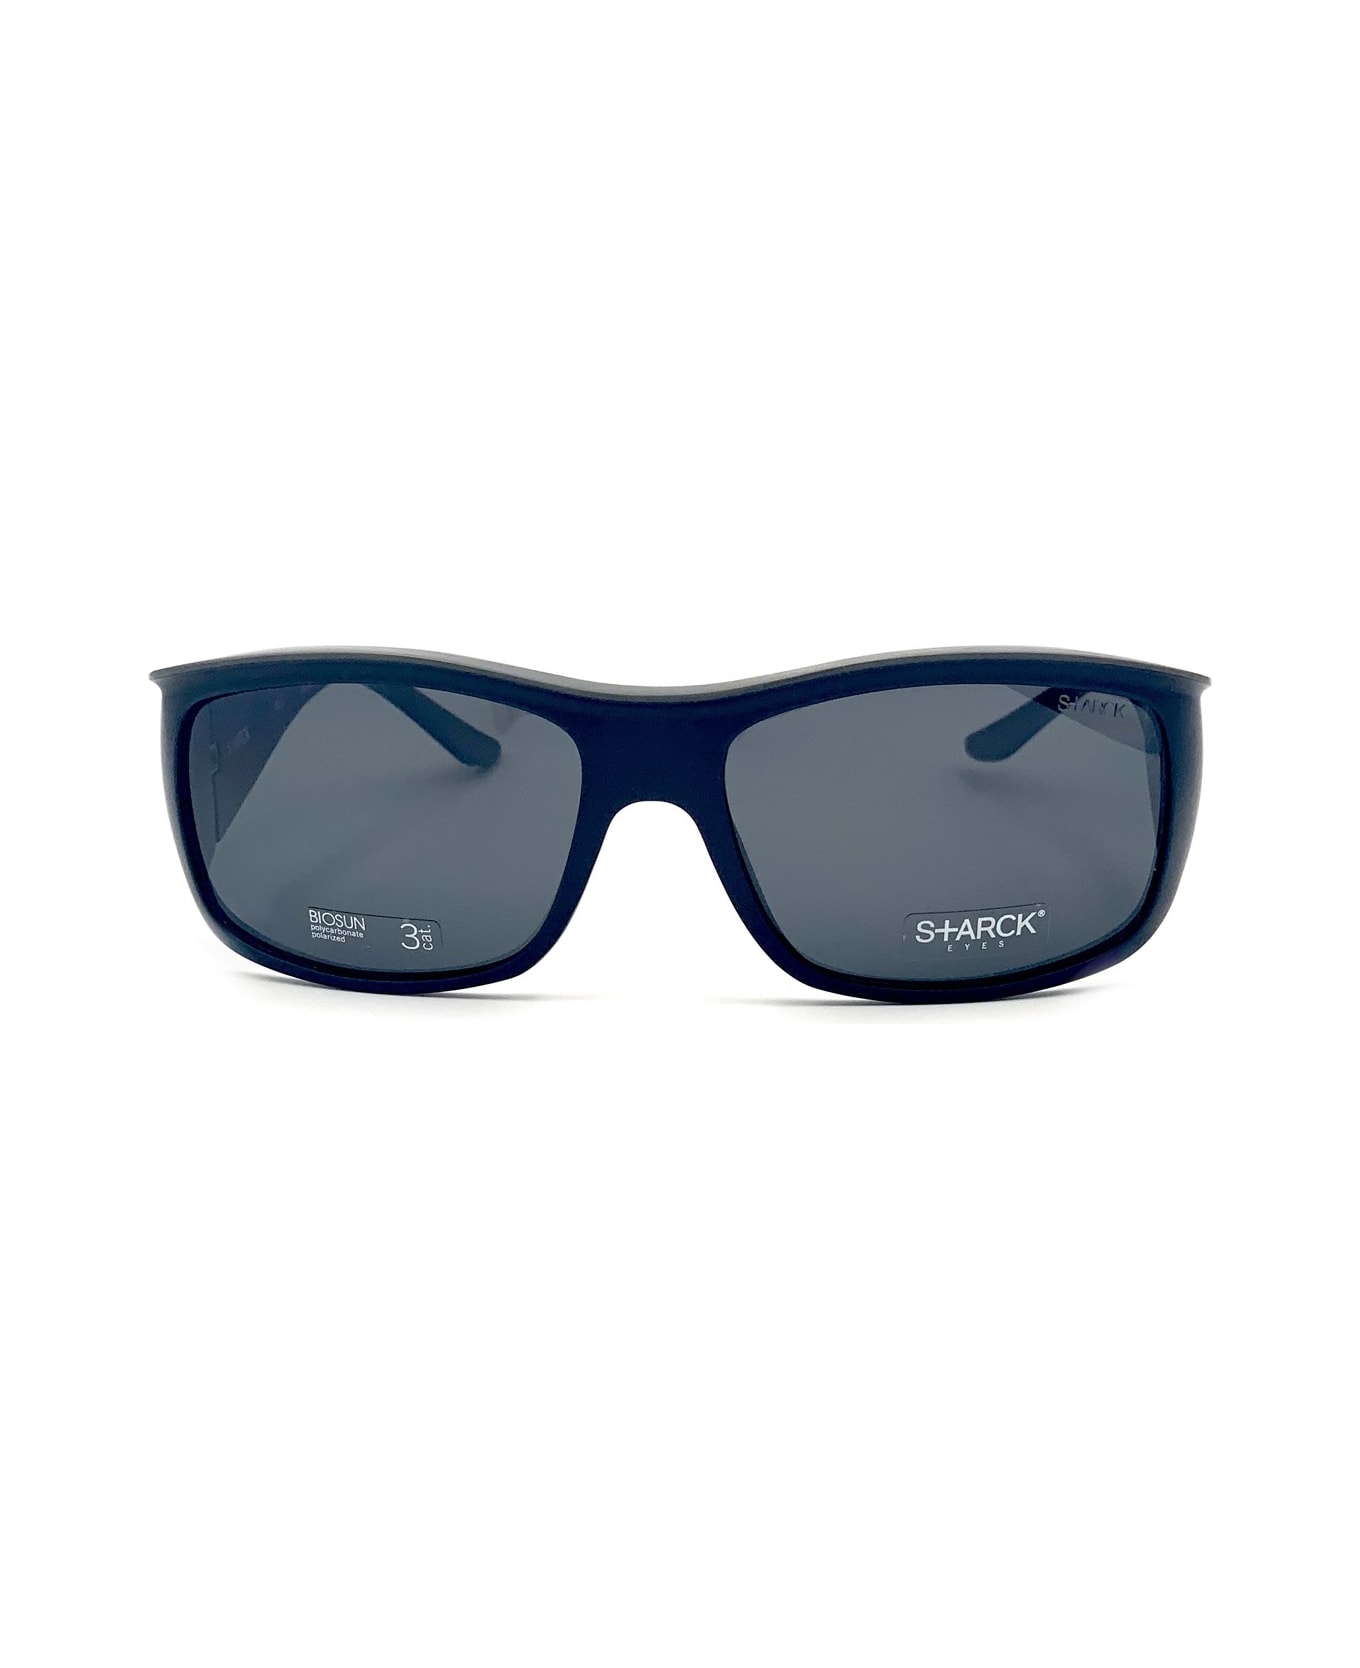 Philippe Starck Pl 1088 Sunglasses - Nero